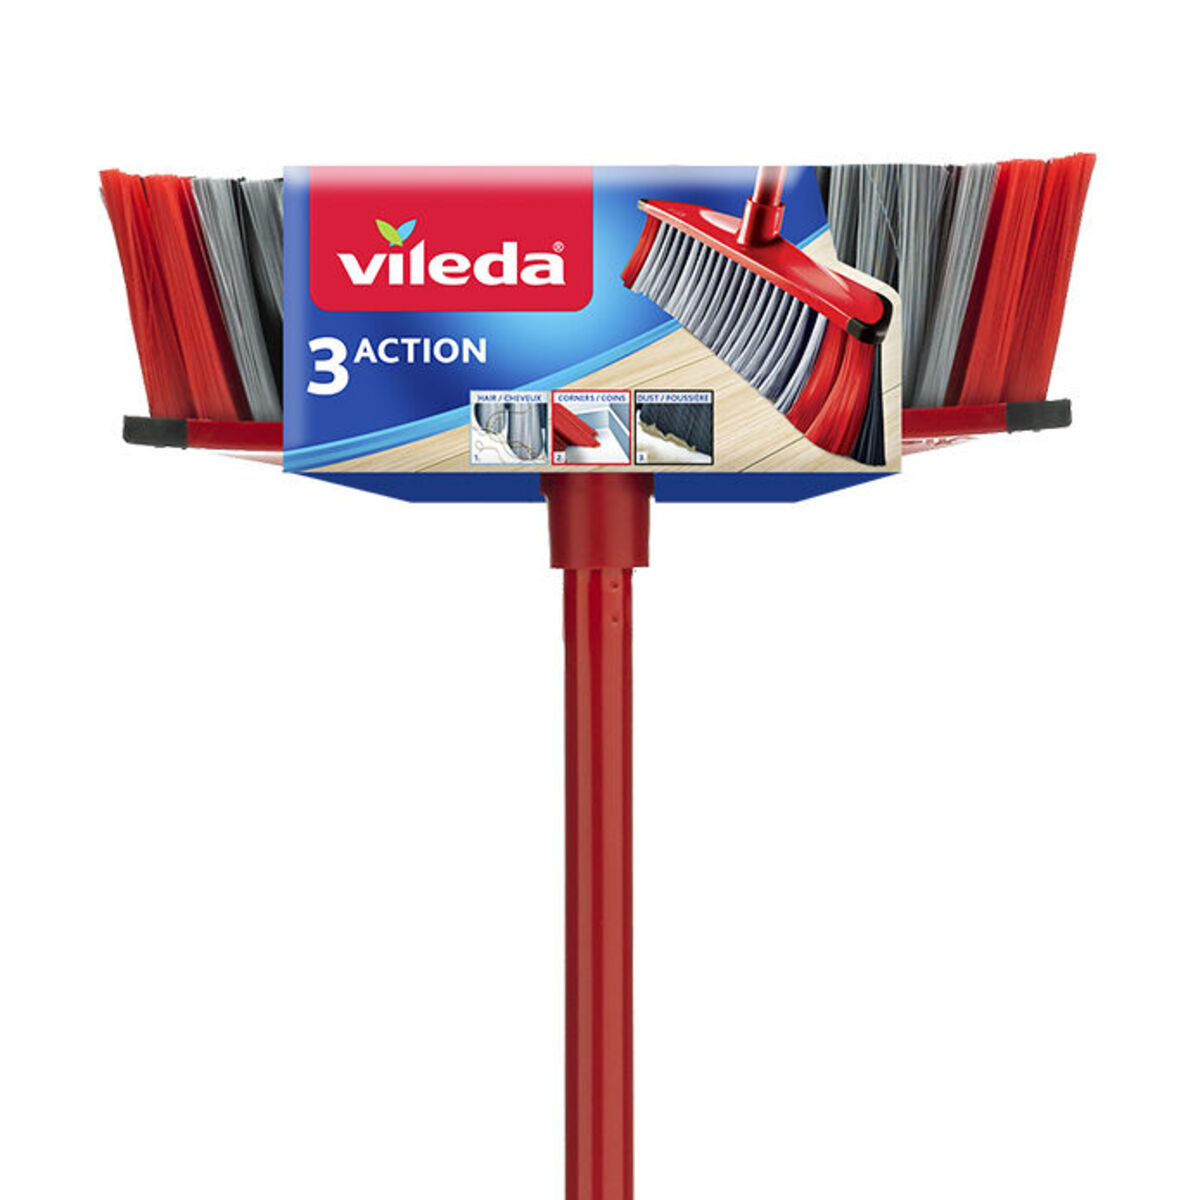 Vileda 3Action Broom with Stick, Red,VB0055